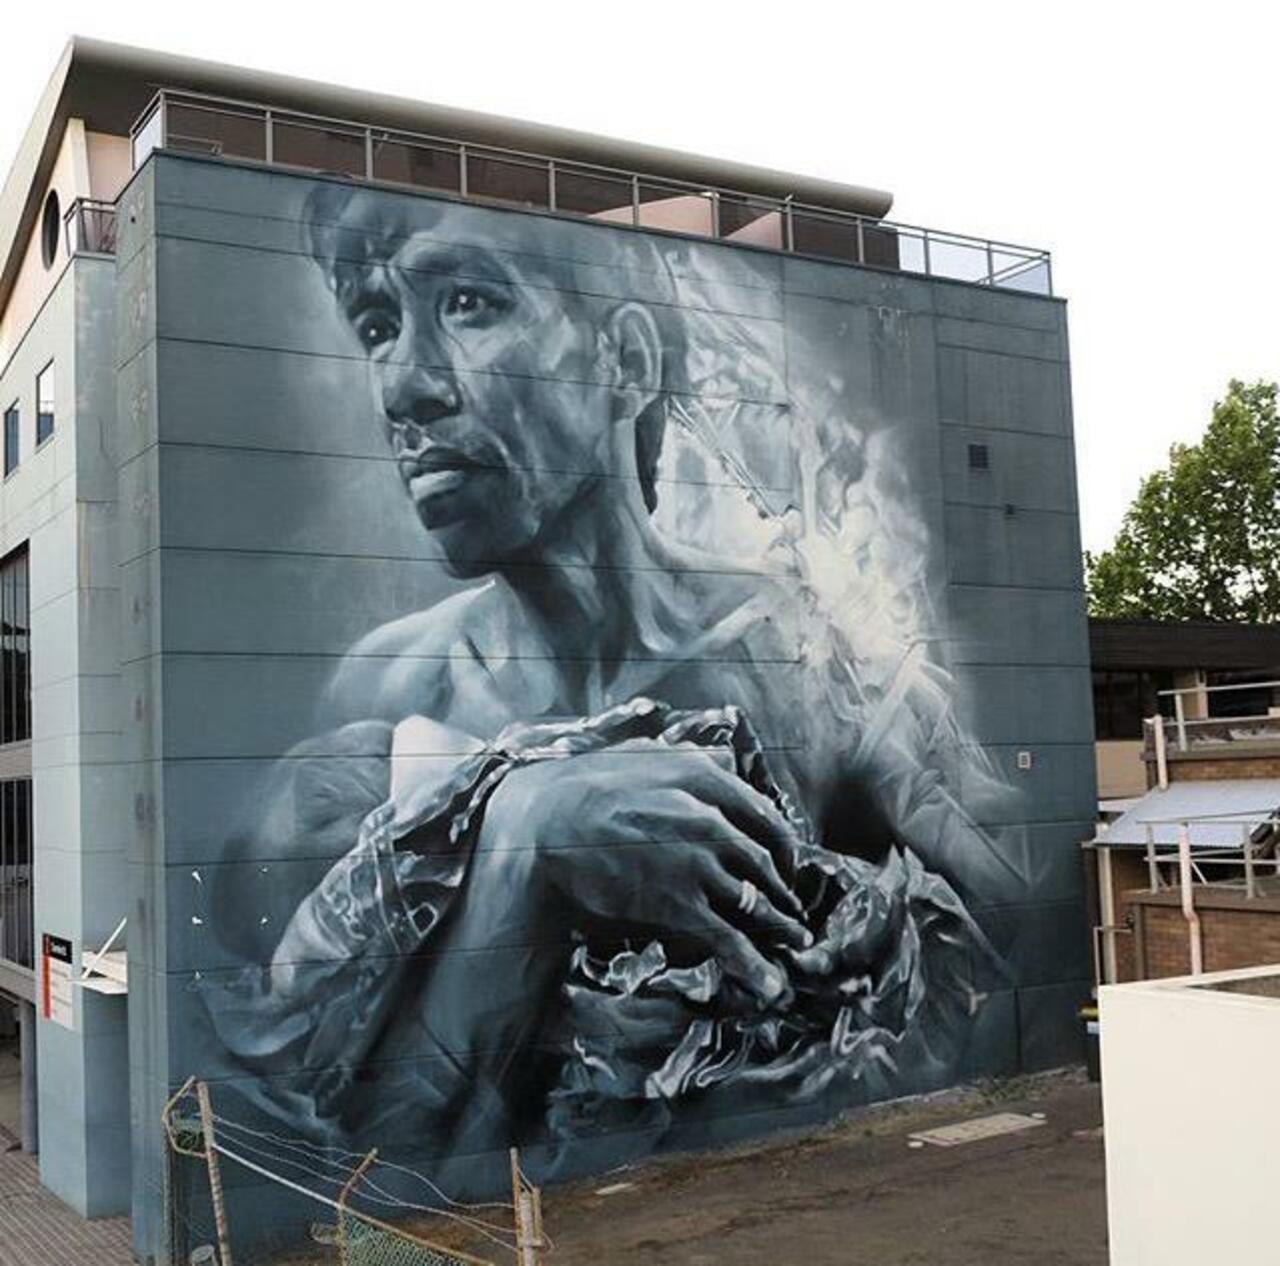 New Street Art by Guido Van Helten in Wollongong Australia 

#art #graffiti #mural #streetart http://t.co/49BI2AU60H googlestreetart chin…